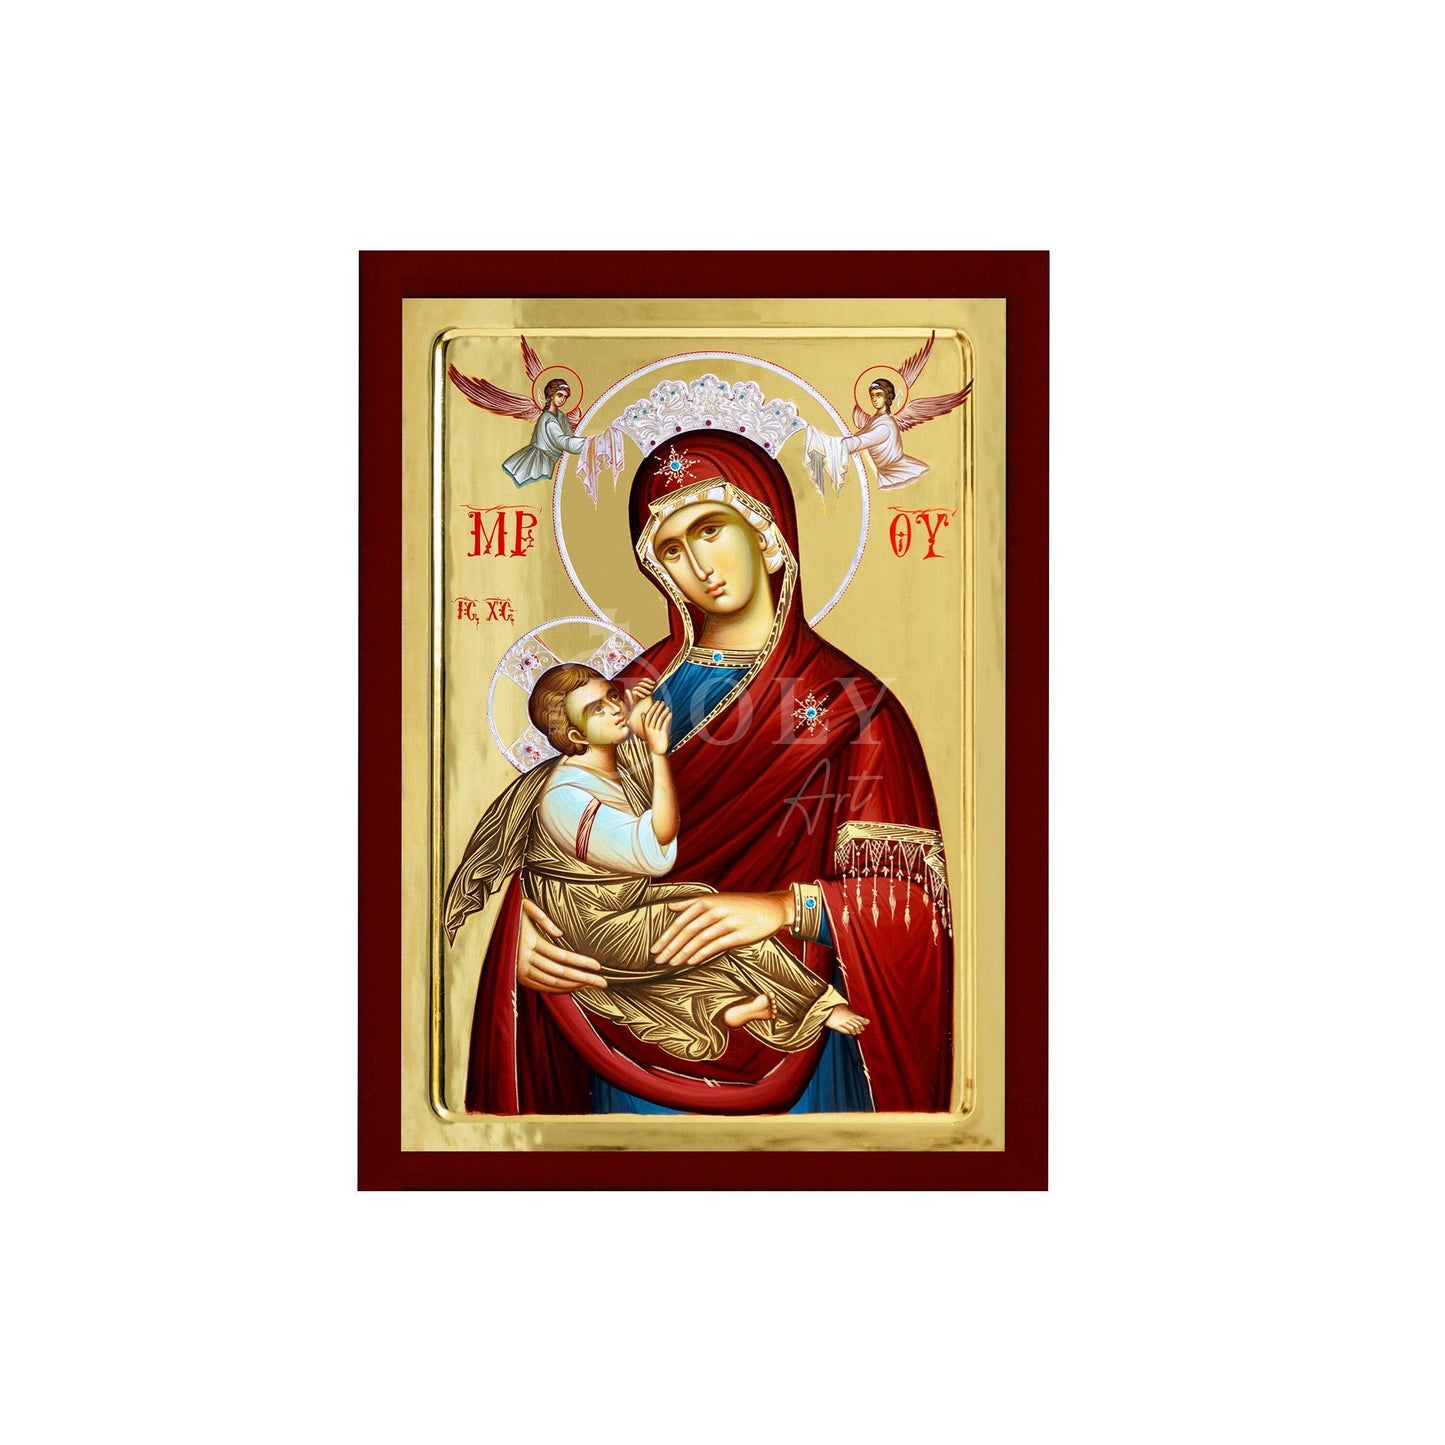 Virgin Mary icon Panagia Galaktotrophousa, Handmade Greek Orthodox Icon, Mother of God Byzantine art, Theotokos wall hanging wood plaque TheHolyArt